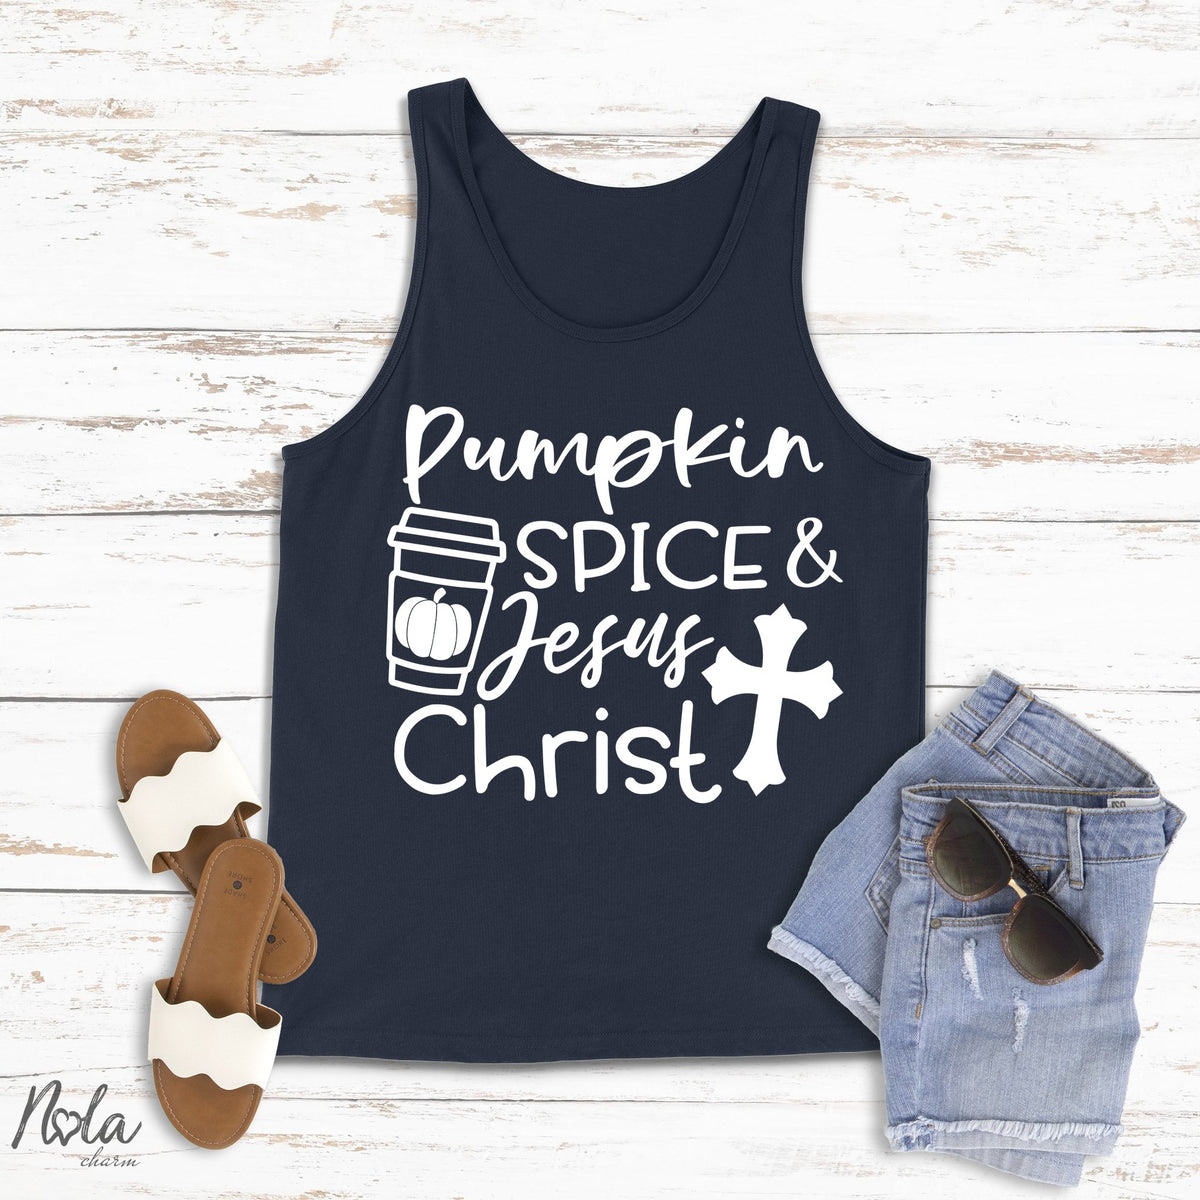 Pumpkin Spice and Jesus Christ - Nola Charm